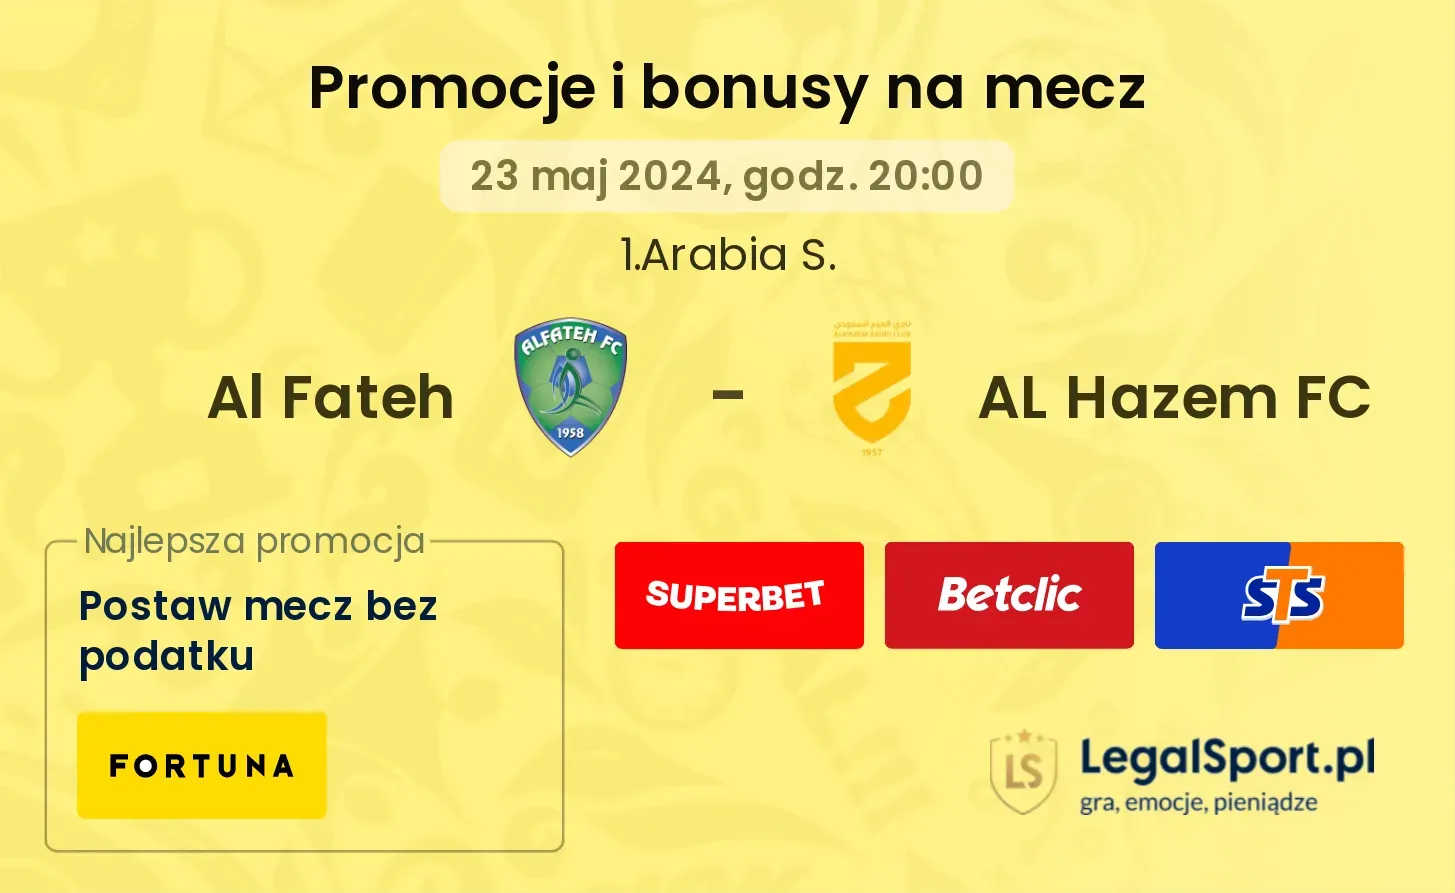 Al Fateh - AL Hazem FC promocje bonusy na mecz